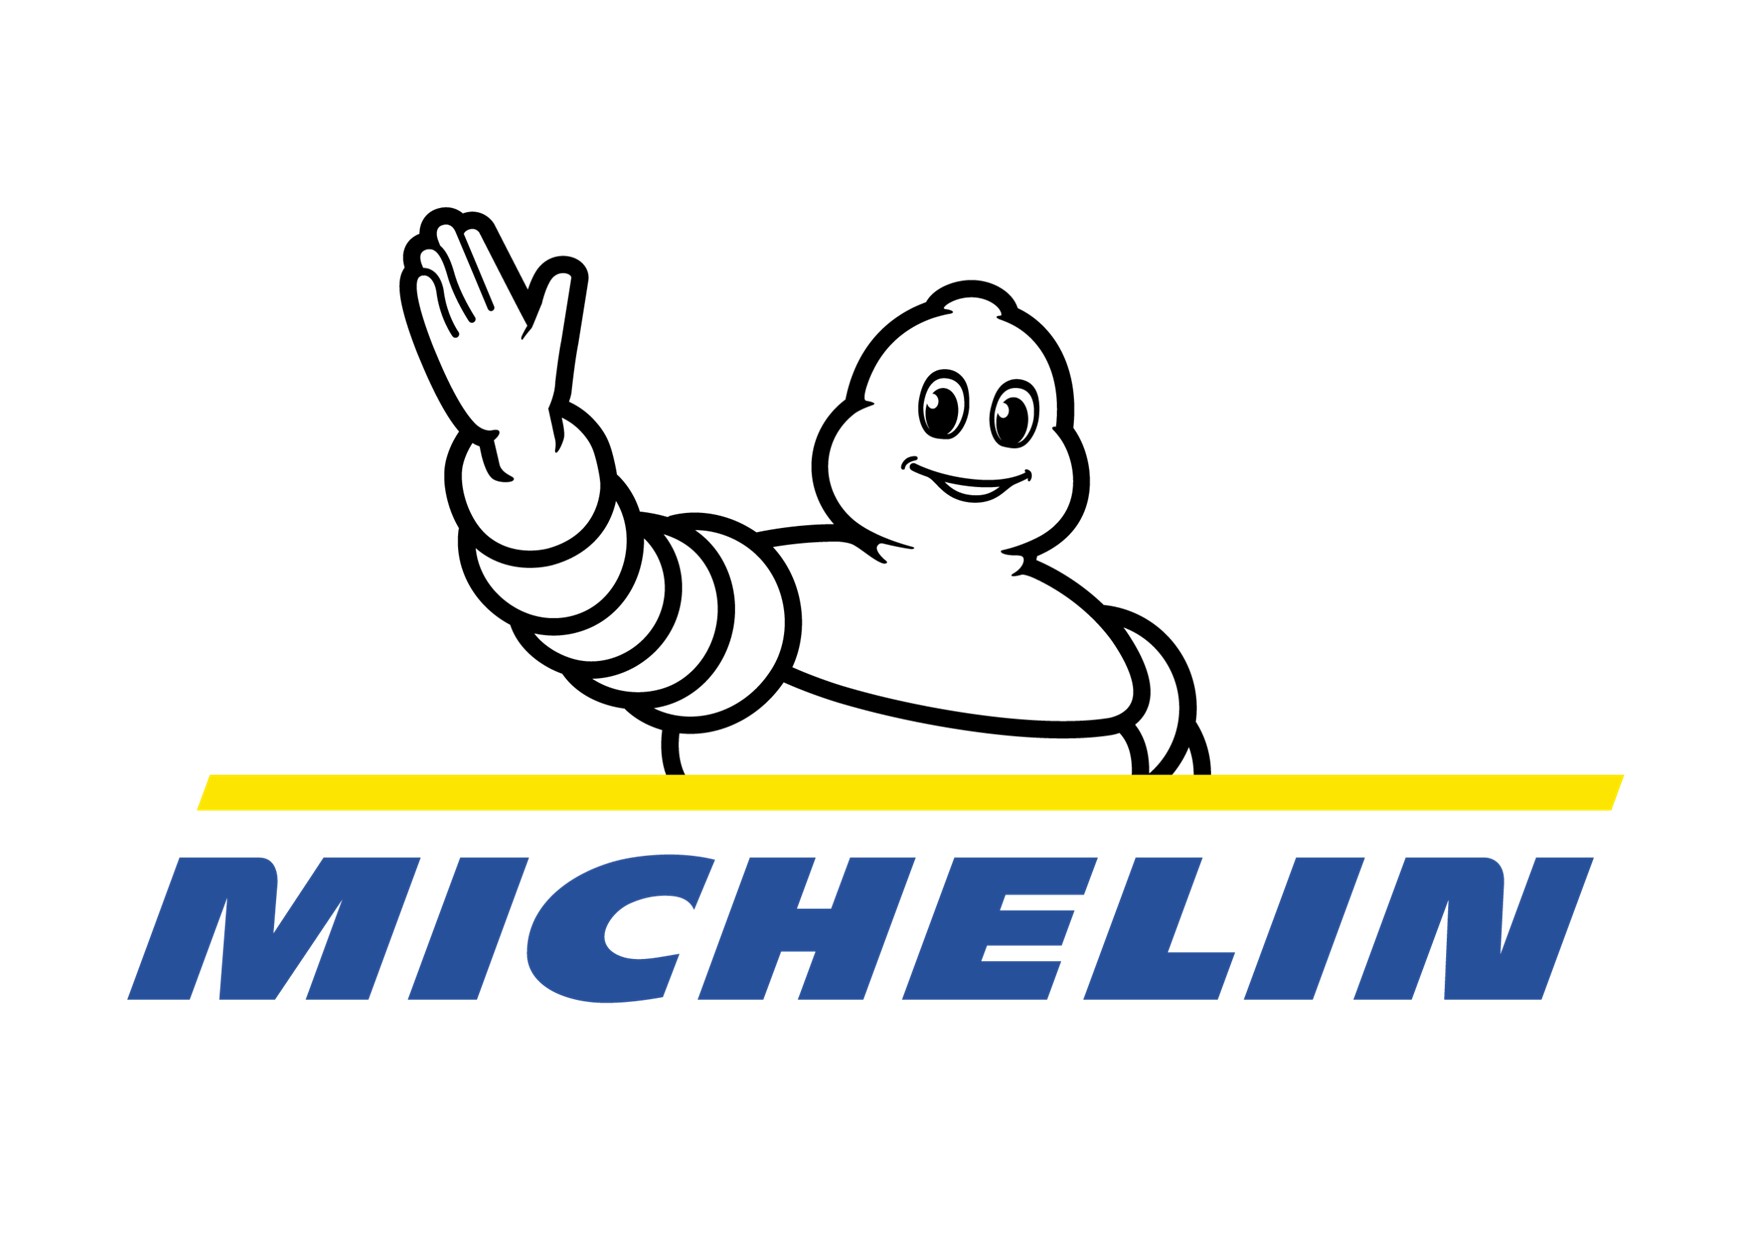 MICHELIN – BRANDS OF NICHINAO